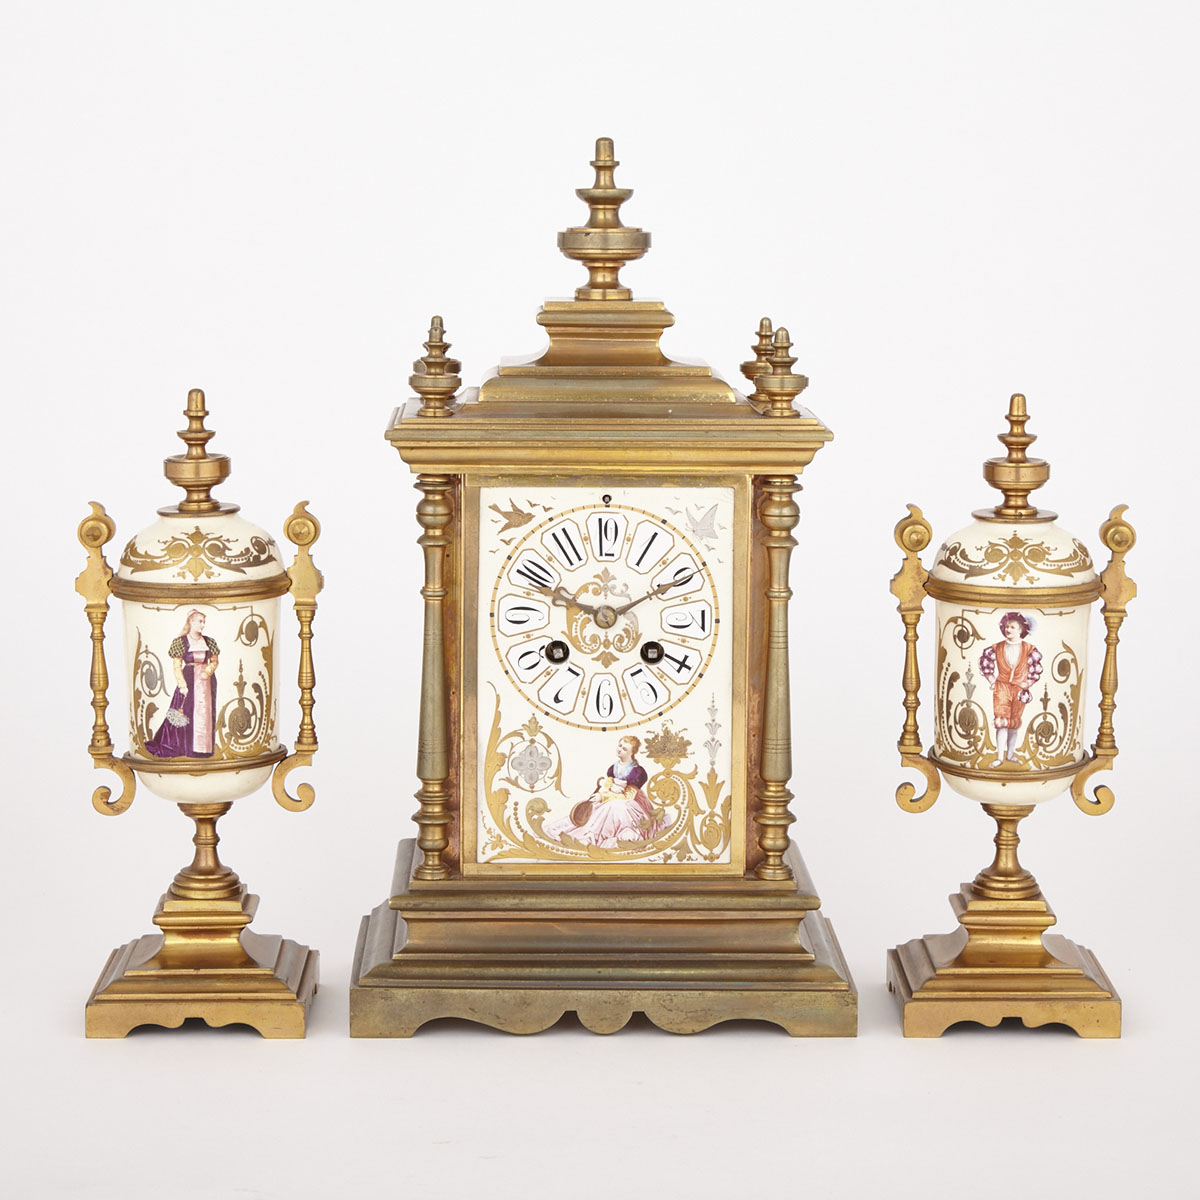 Three Piece French Painted Earthenware Mounted Gilt Bronze Mantel Clock Garniture, c.1870